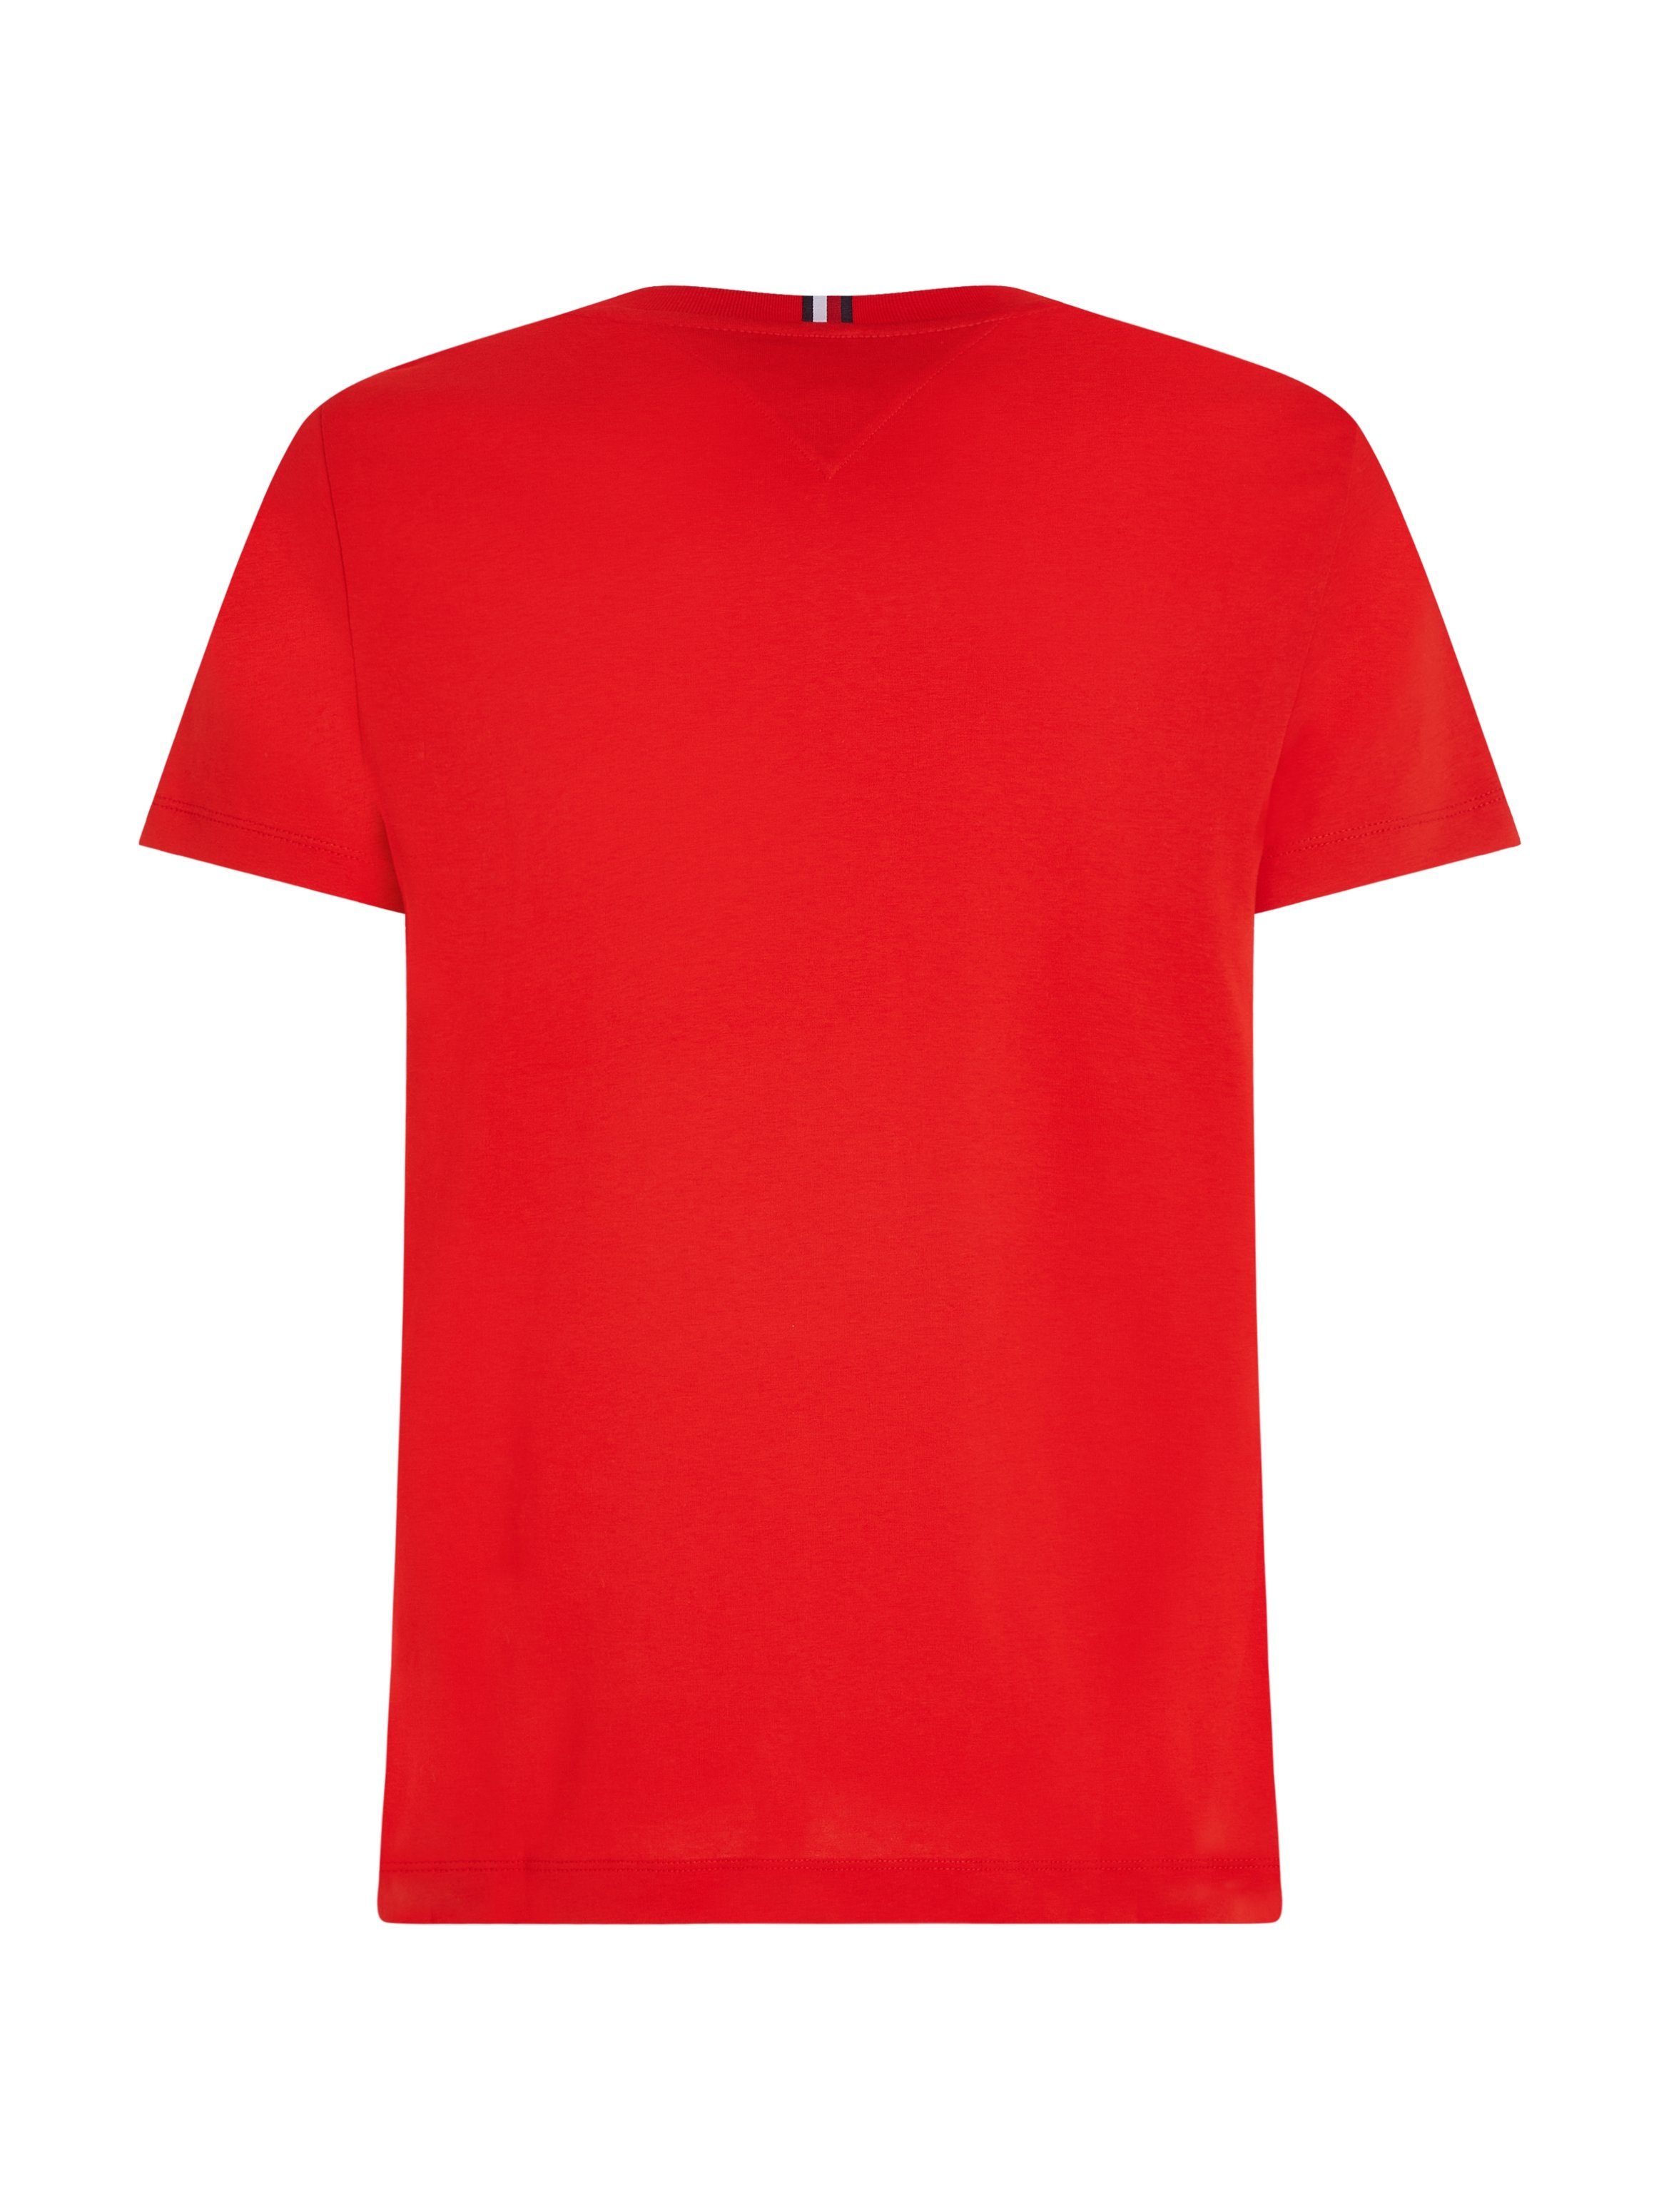 TEE Red gedrucktem mit Logo Hilfiger H Fierce T-Shirt Tommy EMBLEM